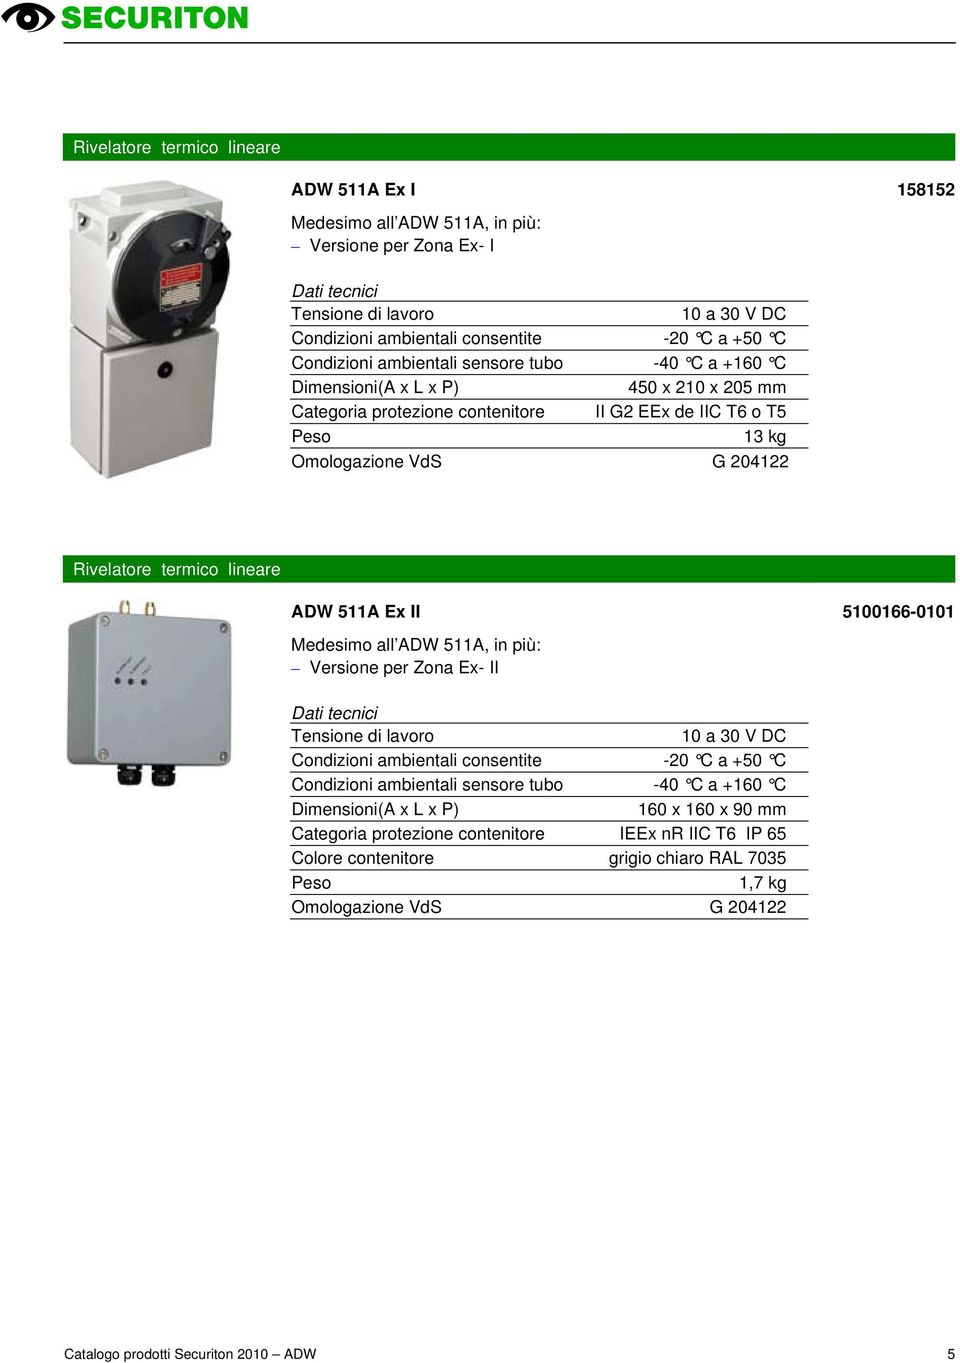 511A Ex II Medesimo all ADW 511A, in più: Versione per Zona Ex- II 5100166-0101 10 a 30 V DC Condizioni ambientali consentite -20 C a +50 C Condizioni ambientali sensore tubo -40 C a